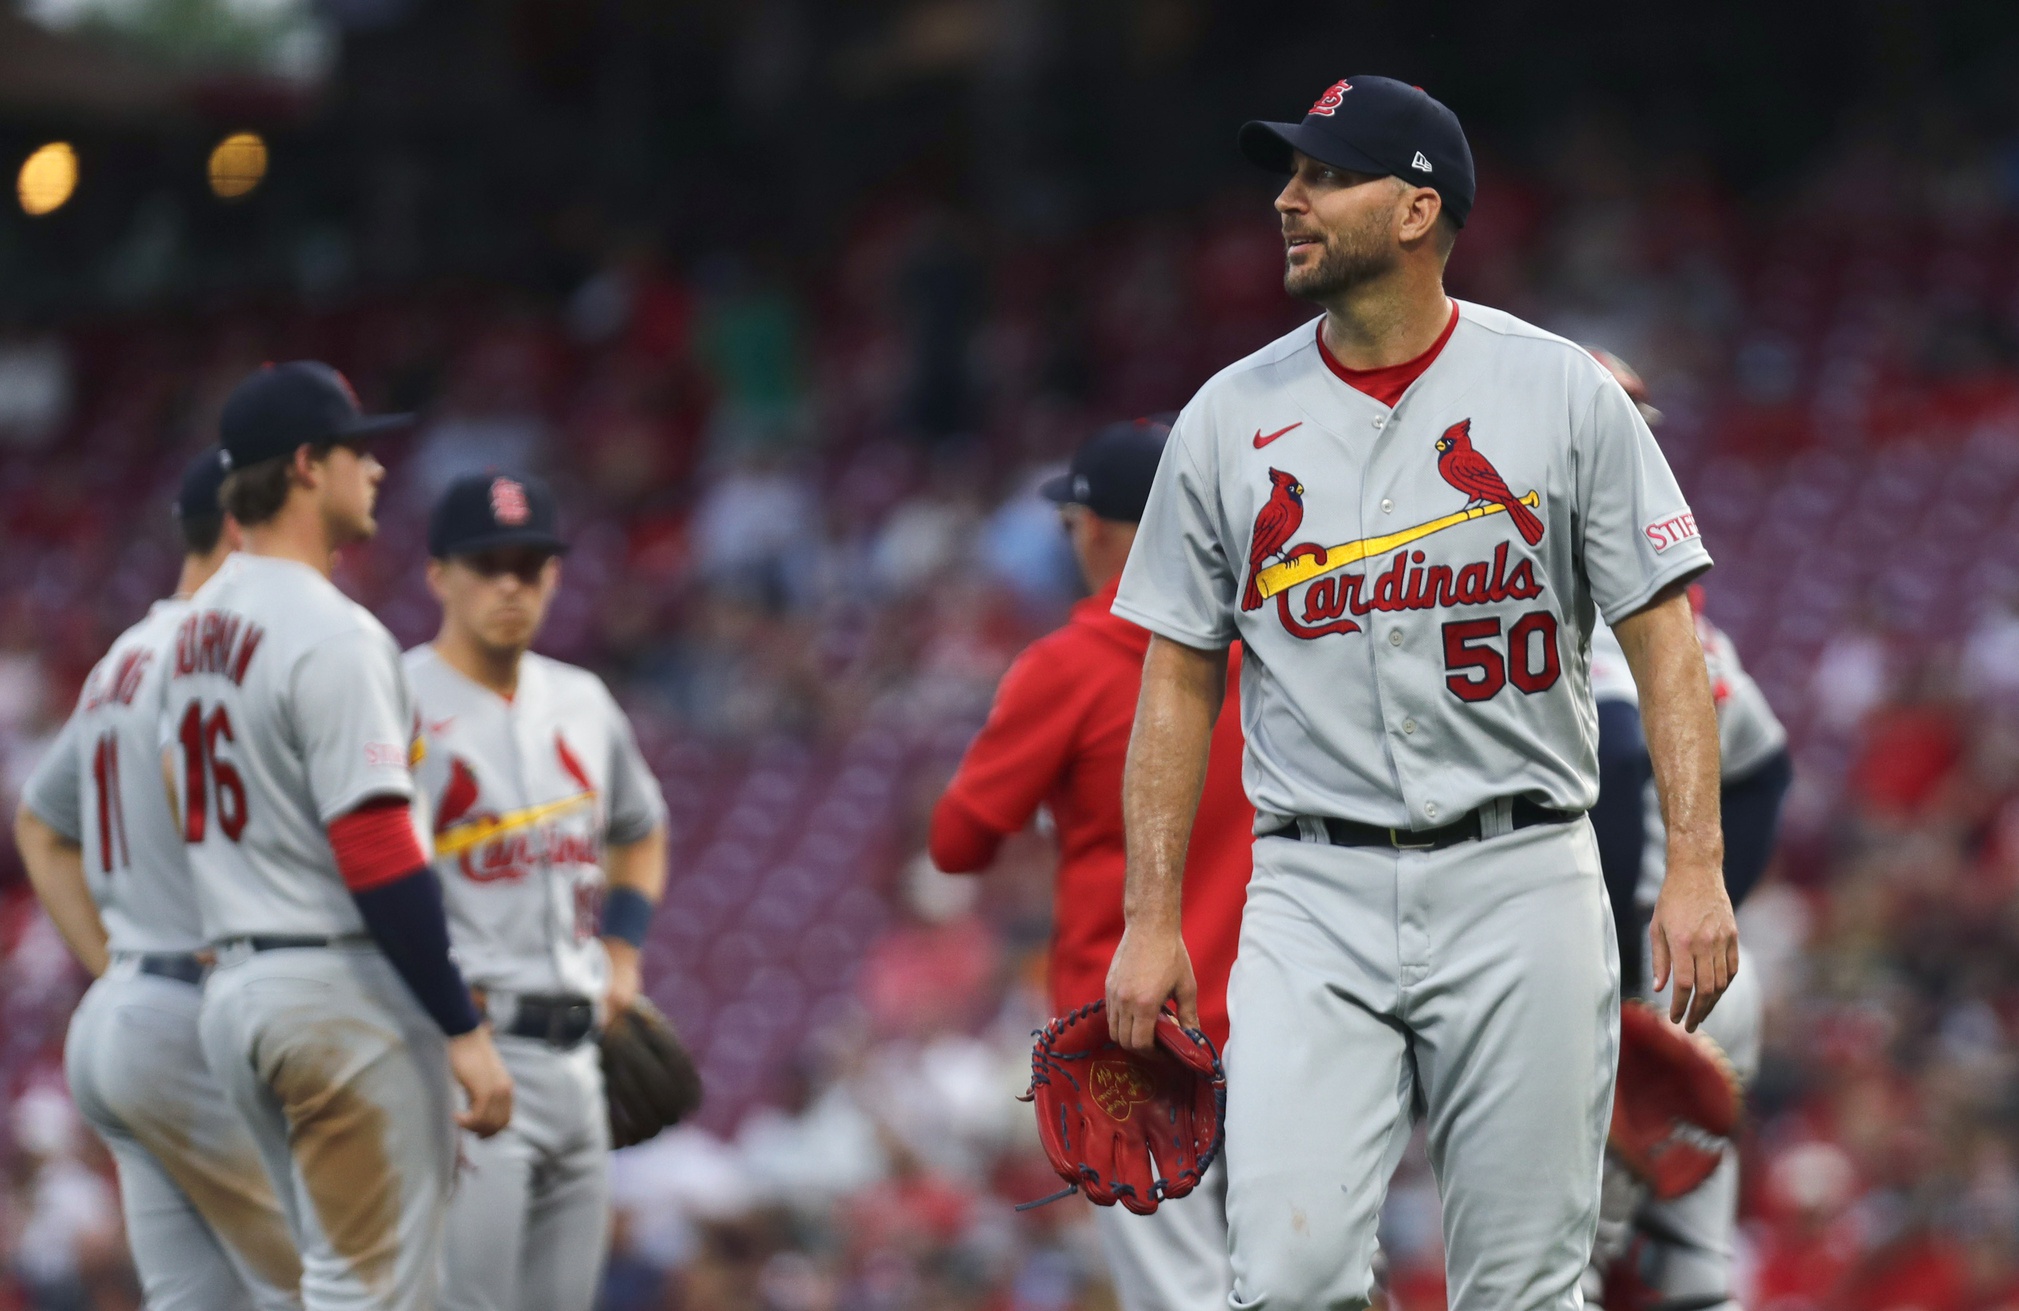 Bernie On The Cardinals: For Adam Wainwright, Shutting Down